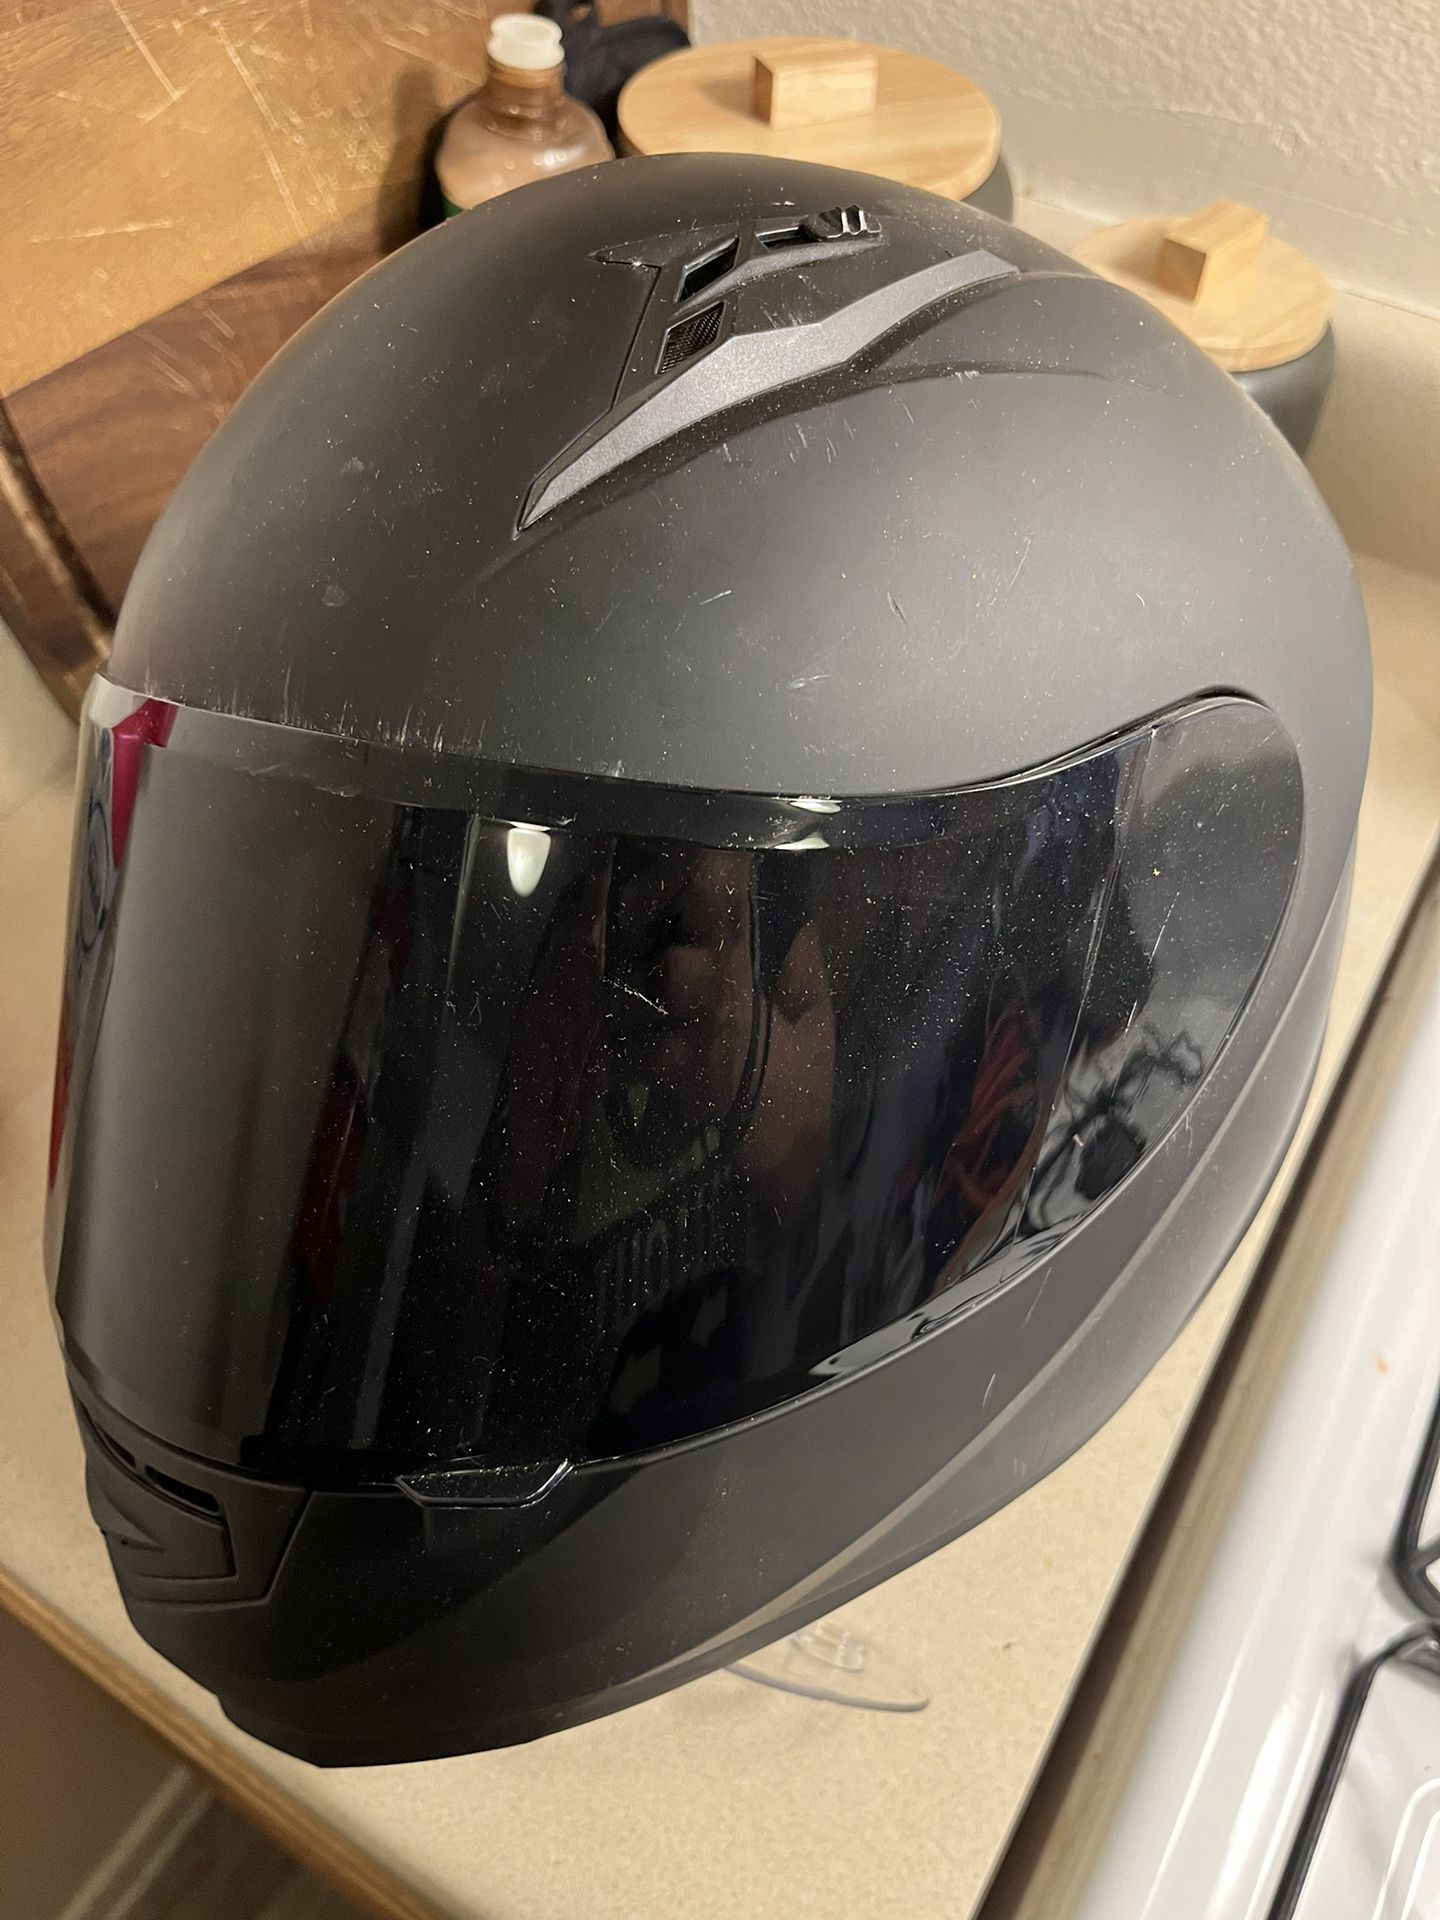 GLXGx 11 Motorcycle Helmet $50